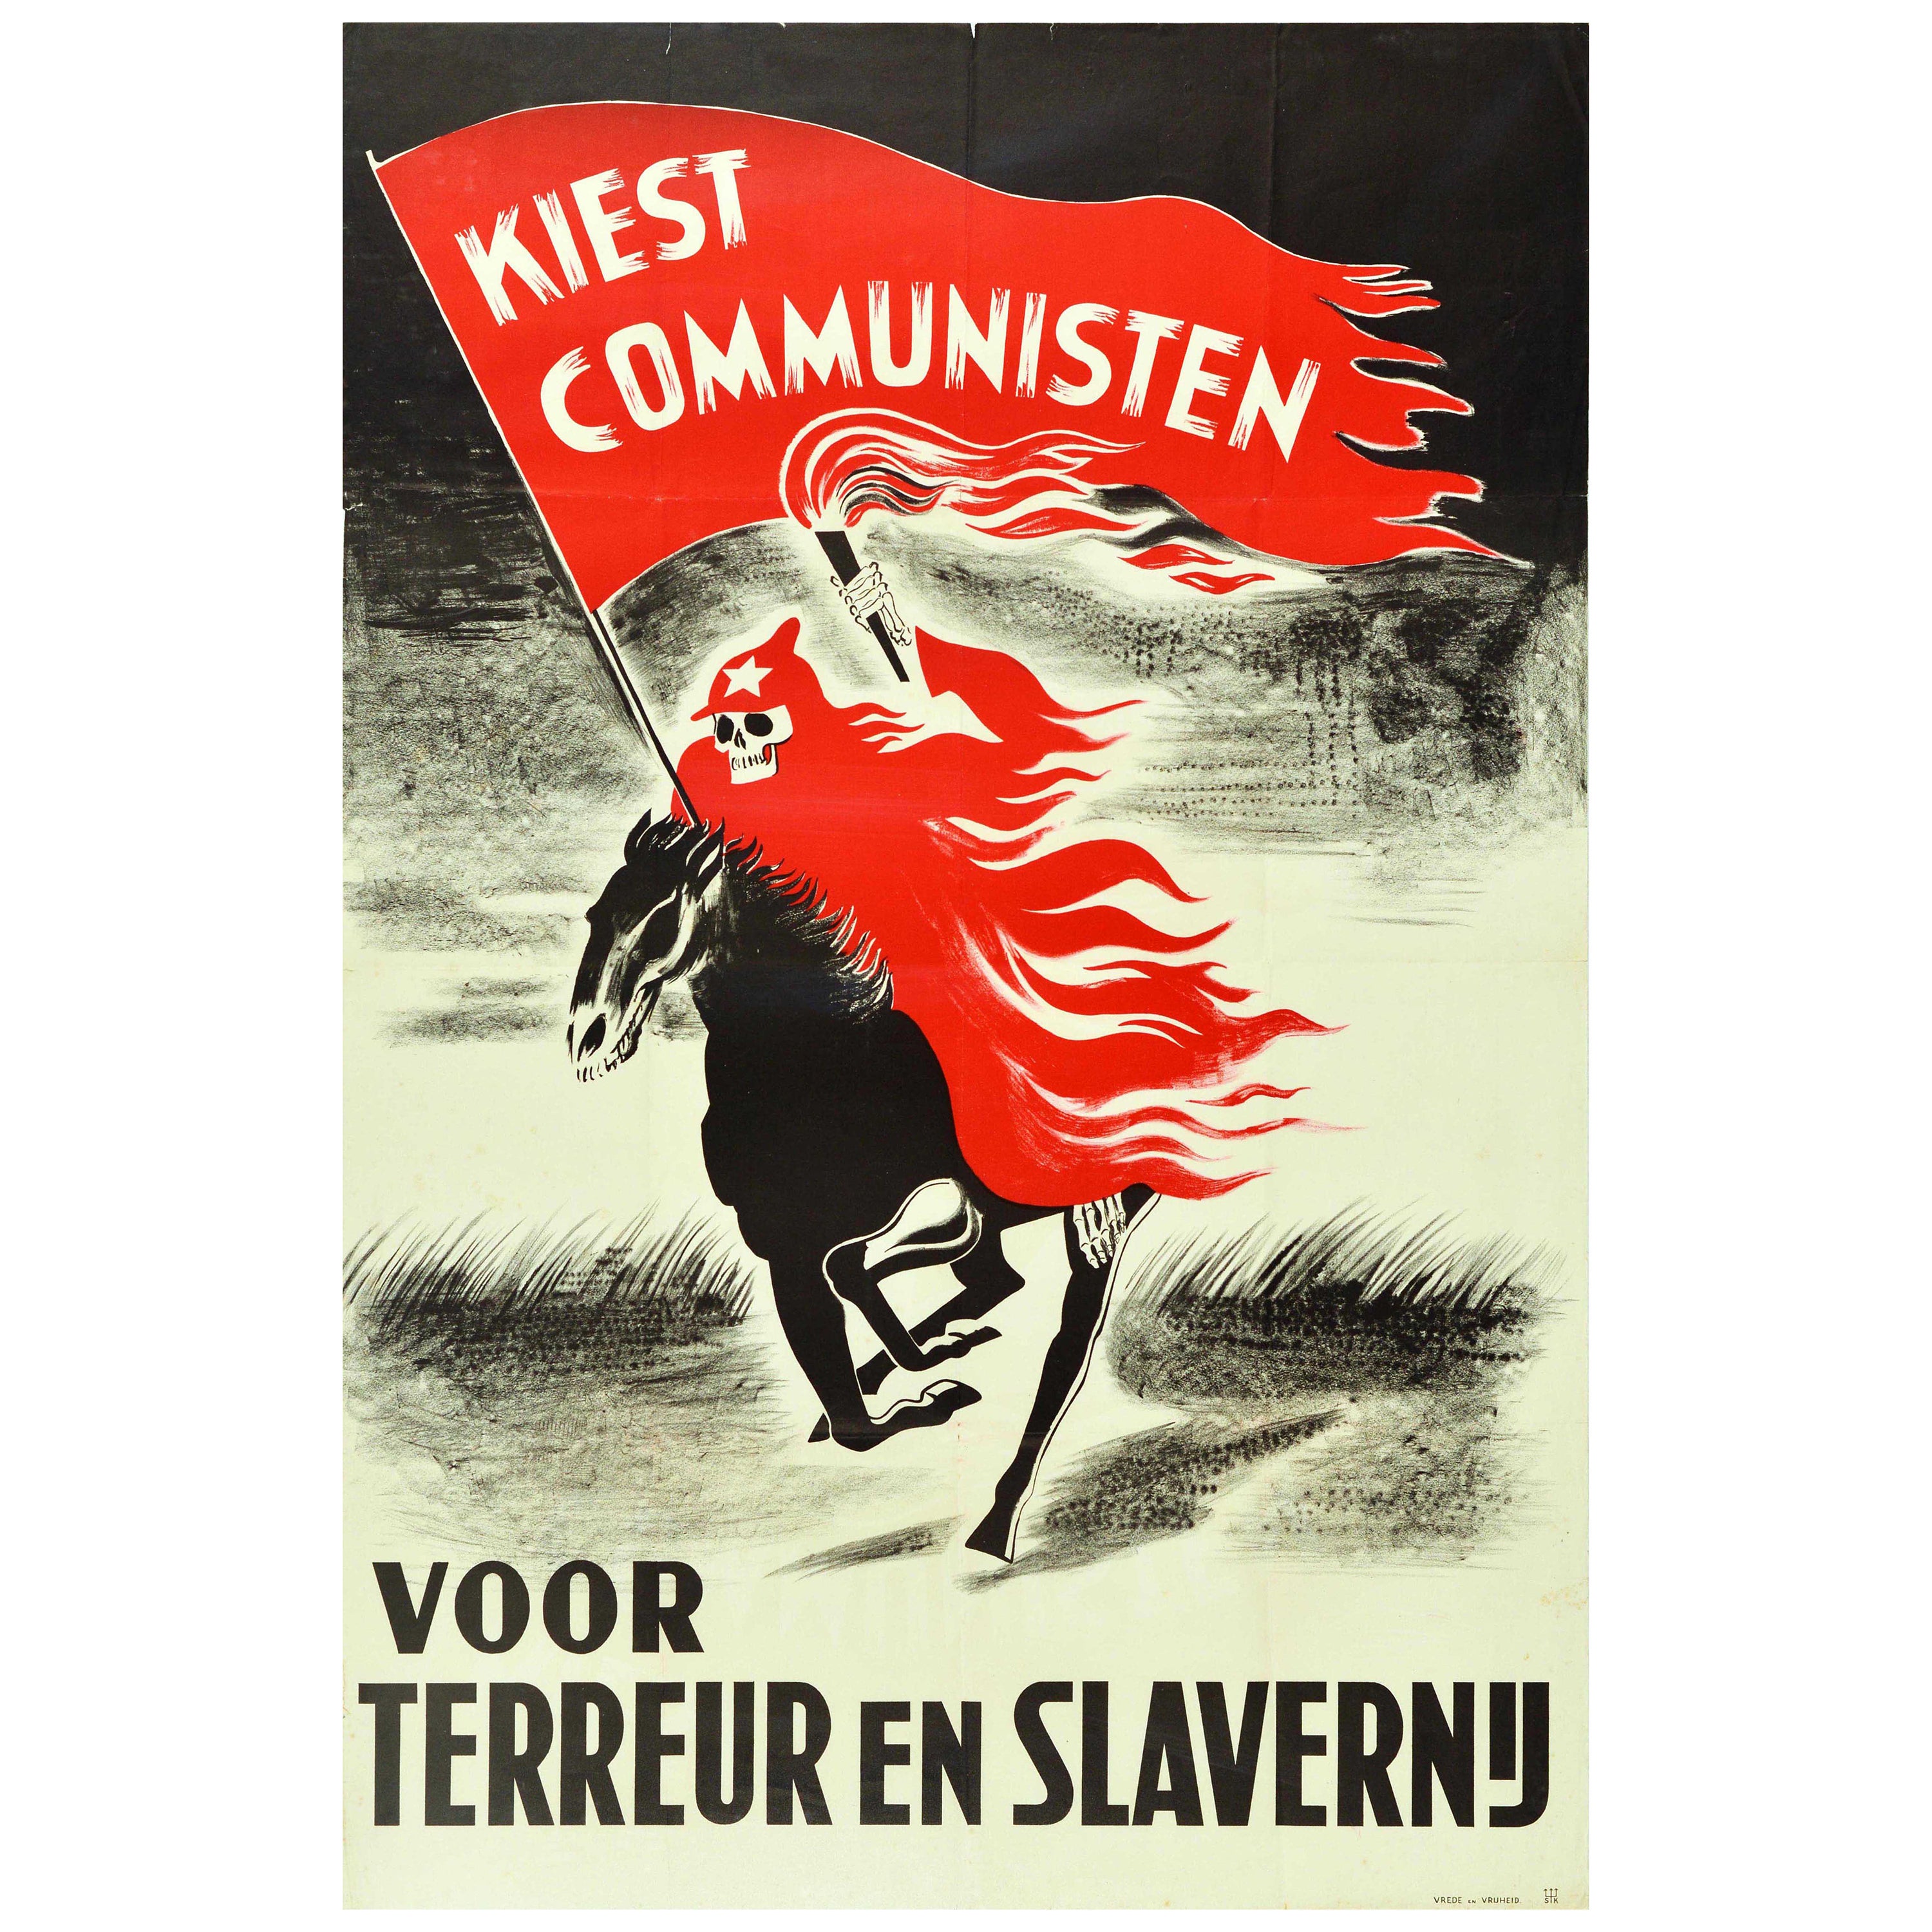 Original Vintage Dutch Election Propaganda Poster Communism Terror And Slavery